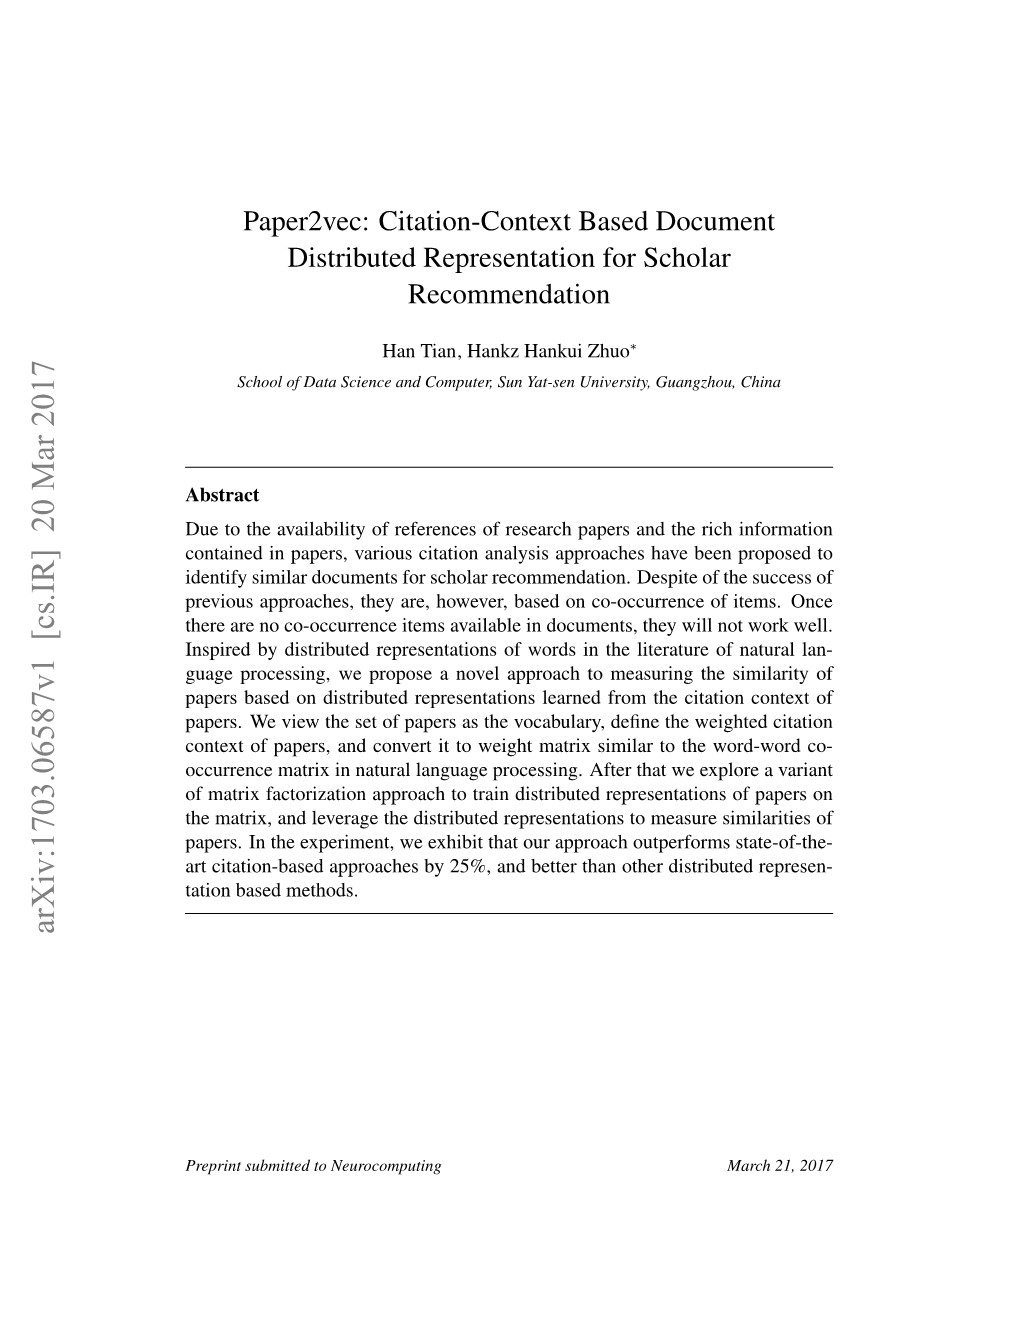 Paper2vec: Citation-Context Based Document Distributed Representation for Scholar Recommendation